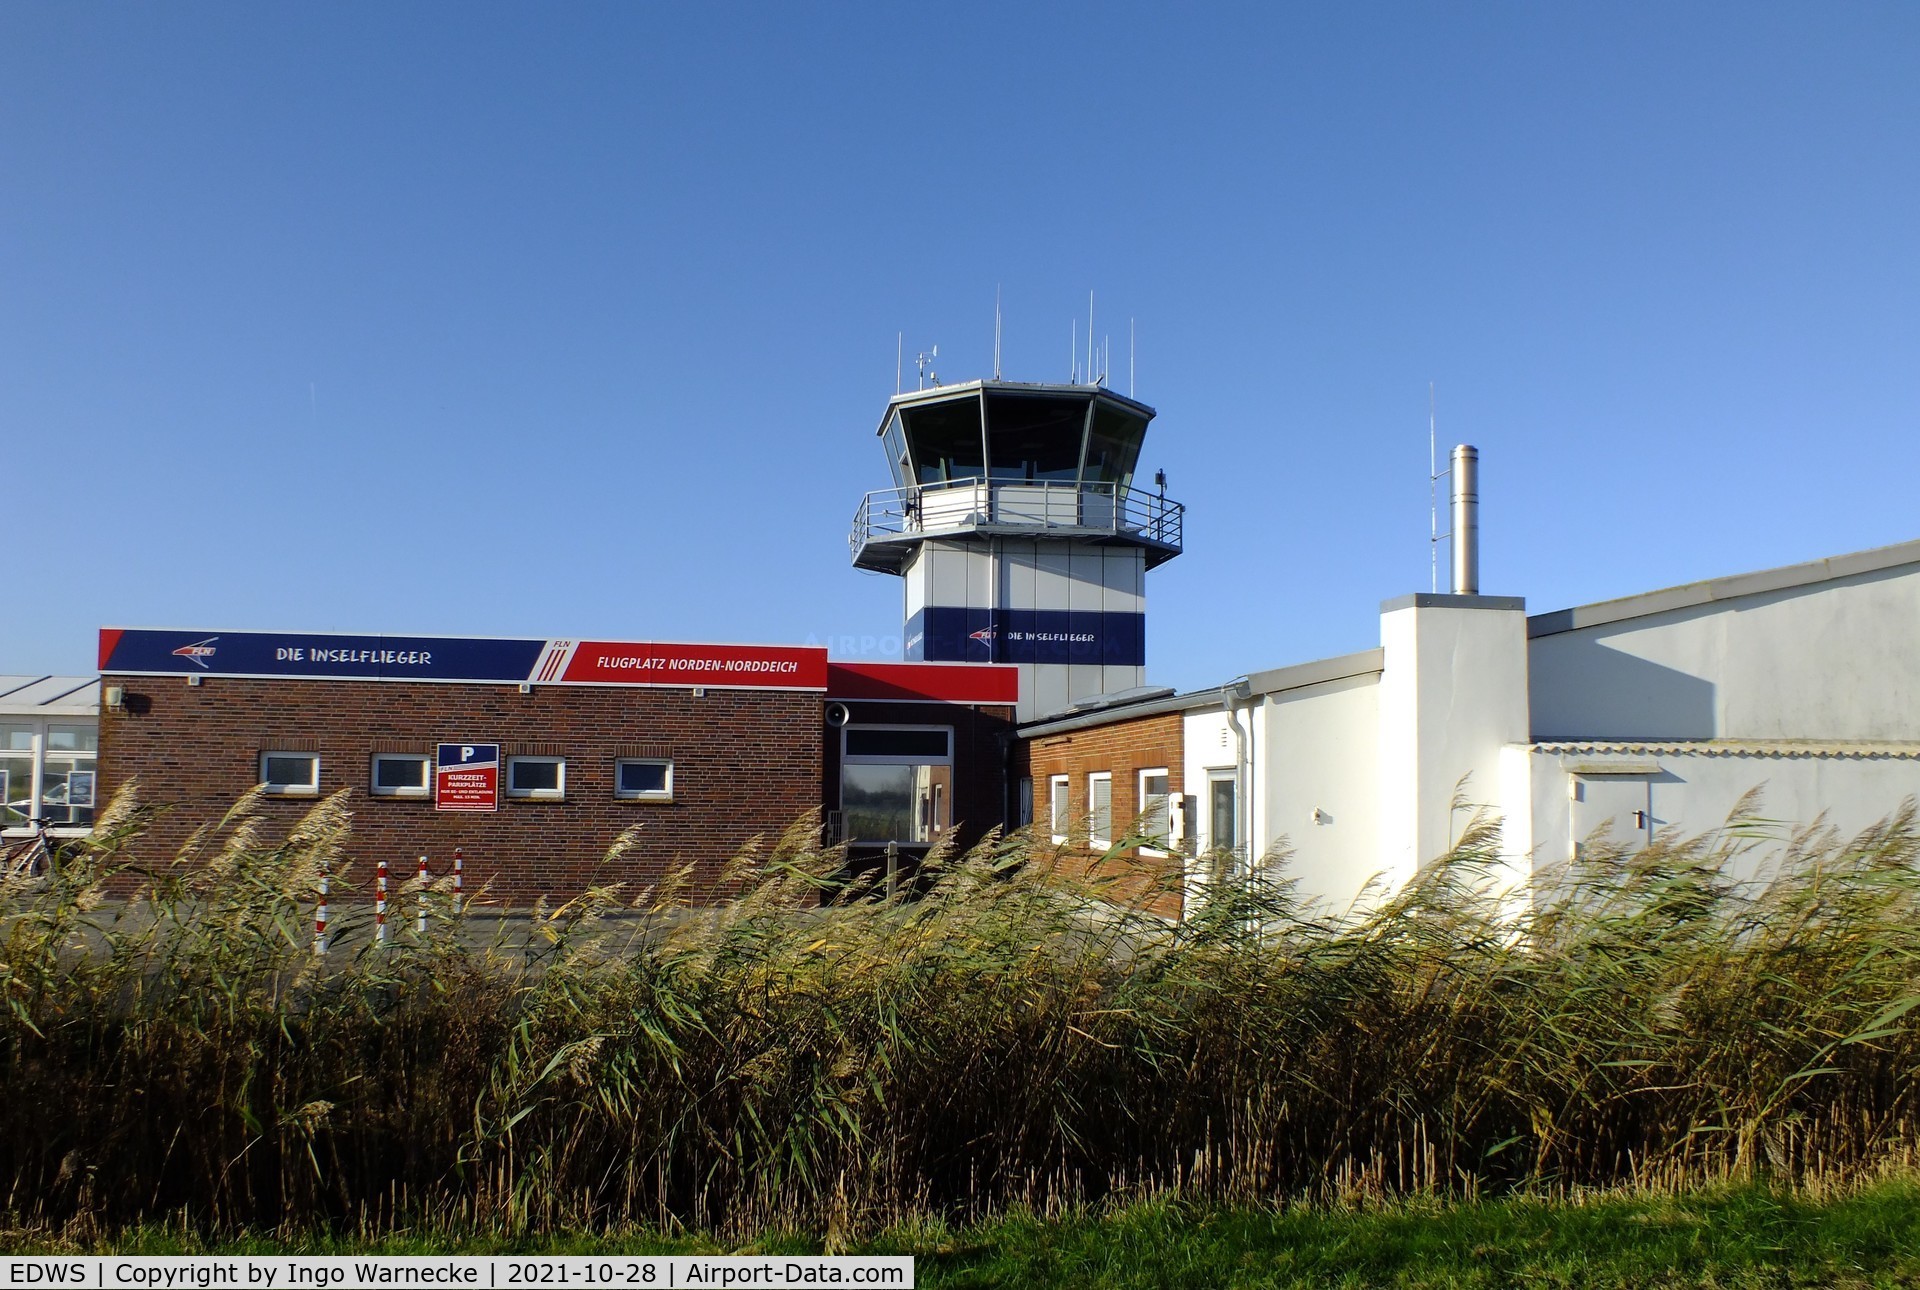 EDWS Airport - Norden-Norddeich airfield terminal, tower and hangar